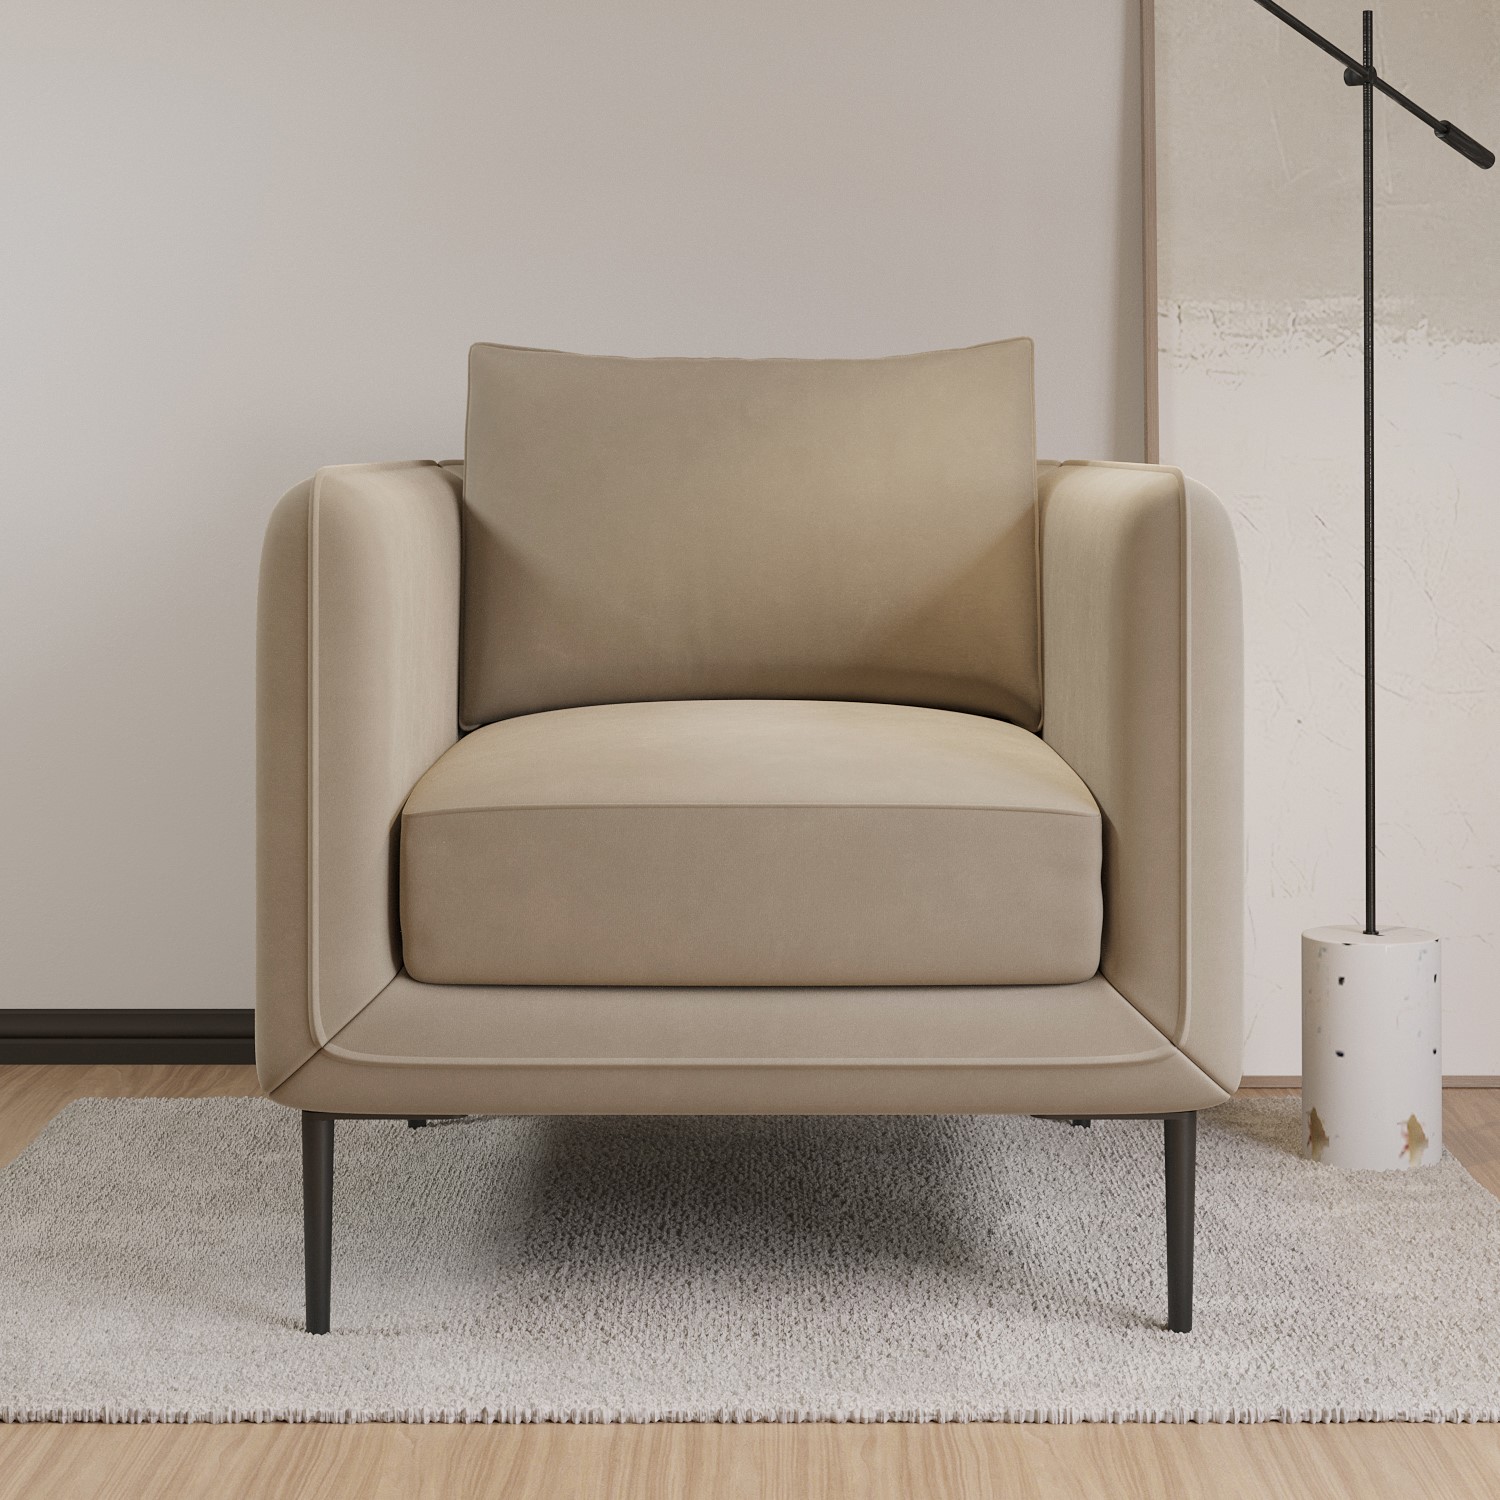 Read more about Beige velvet armchair lenny